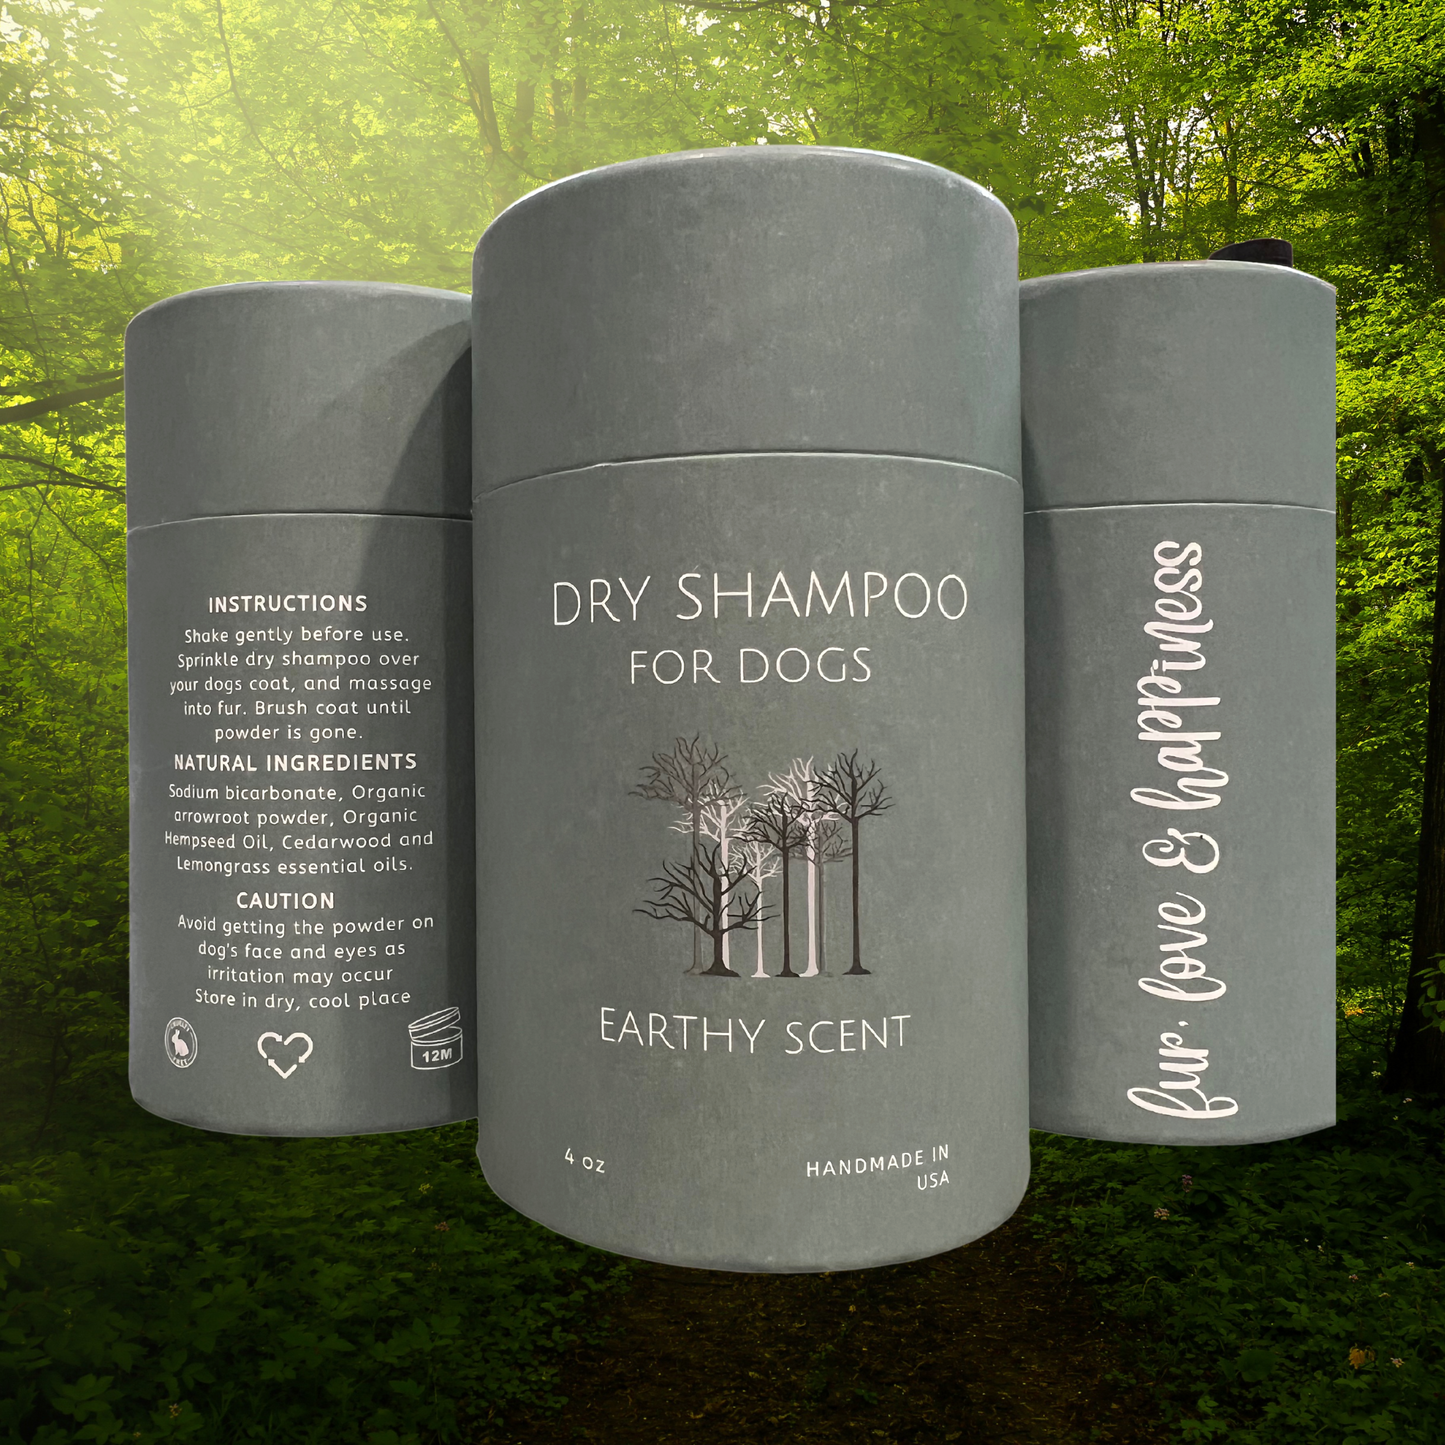 Green dry shampoo powder container, earthy scent cedar wood